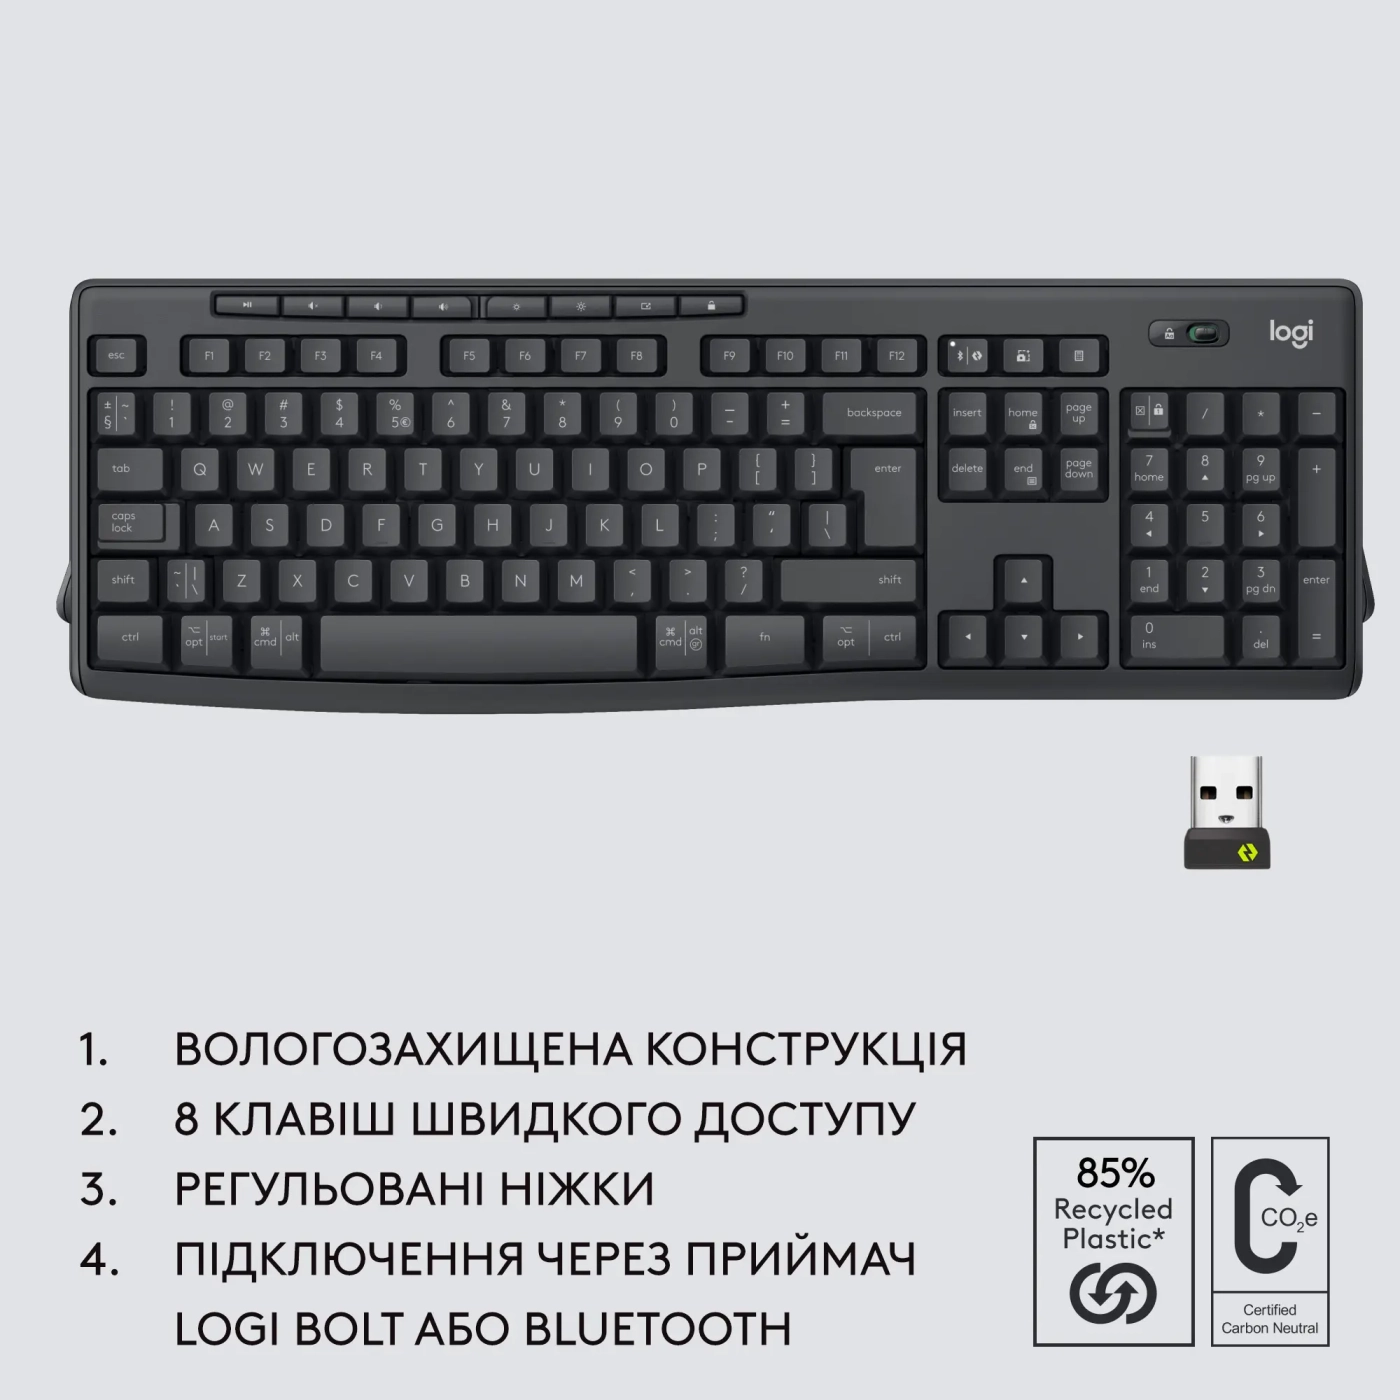 Купити Комплект клавіатура та мишка Logitech MK370 Graphite - фото 6